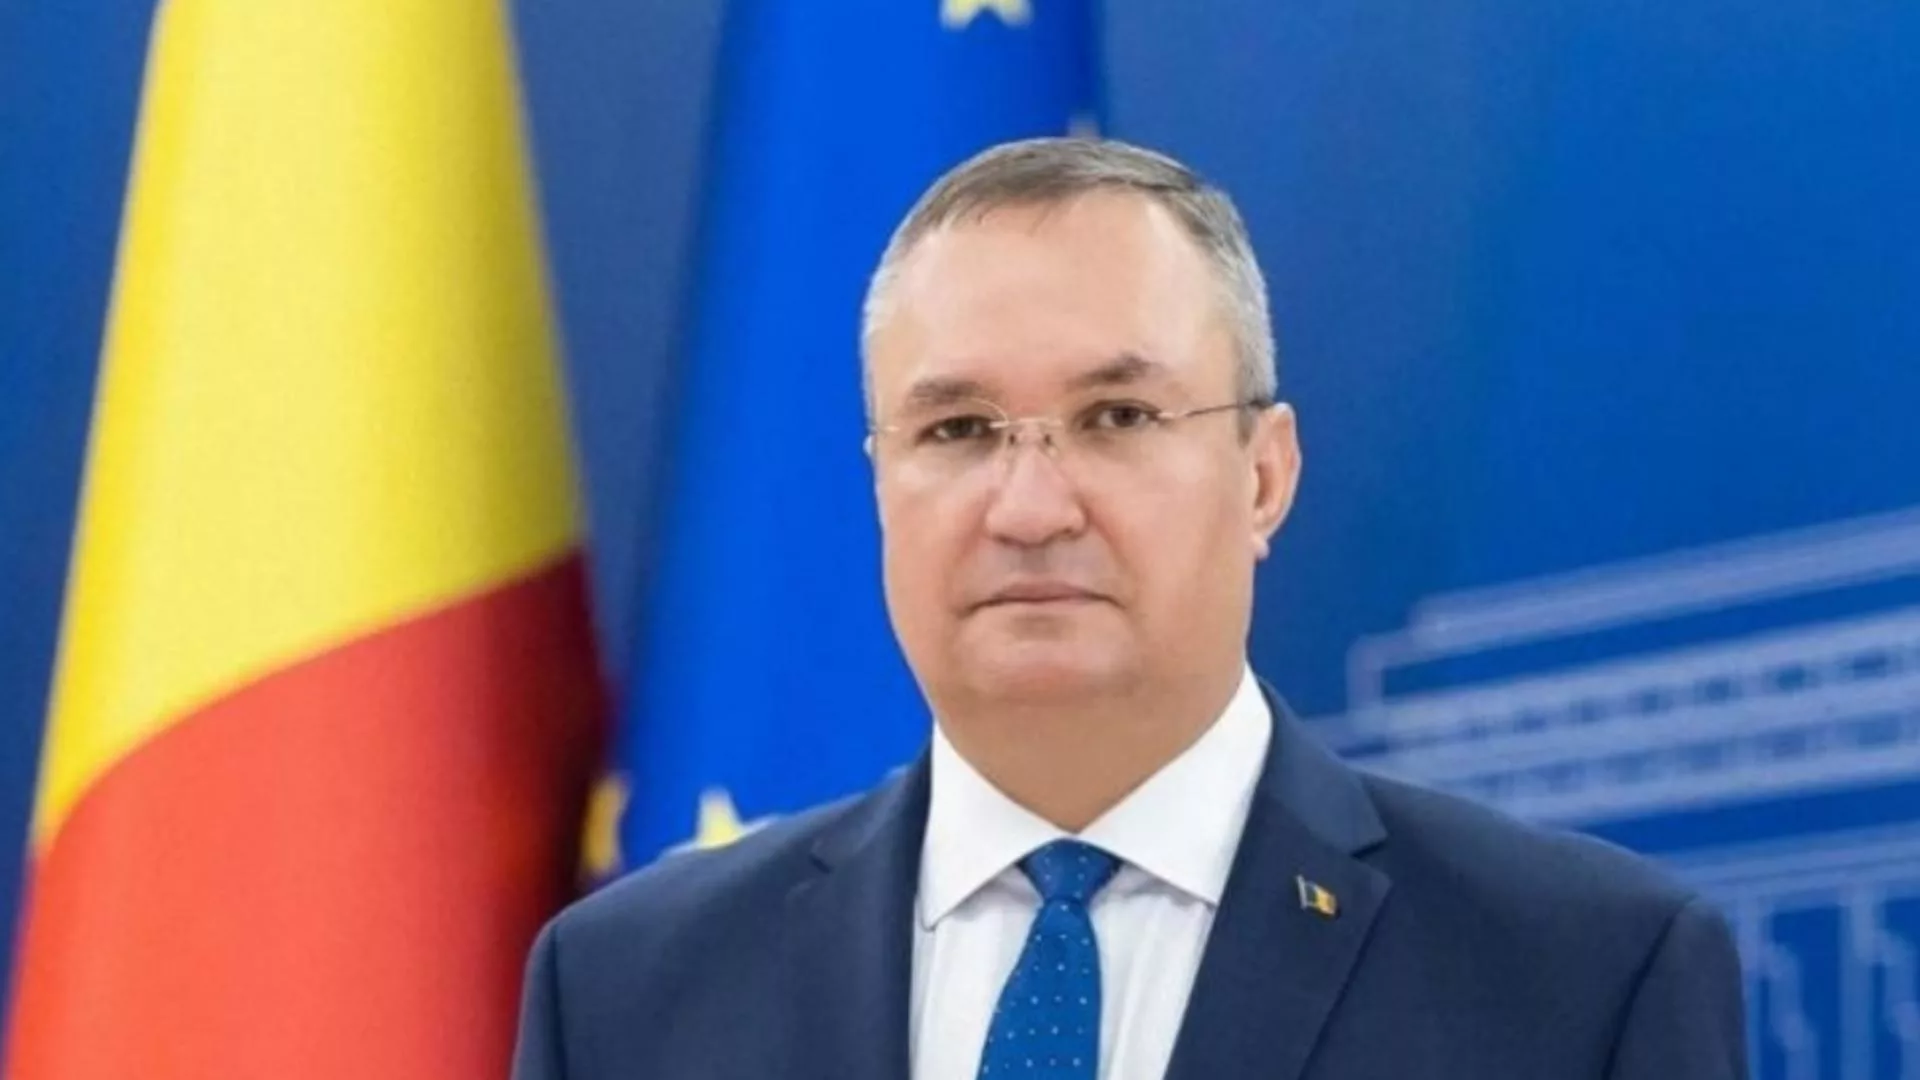 Nicolae Ciucă: Statele Unite sunt cel mai important partener strategic al României